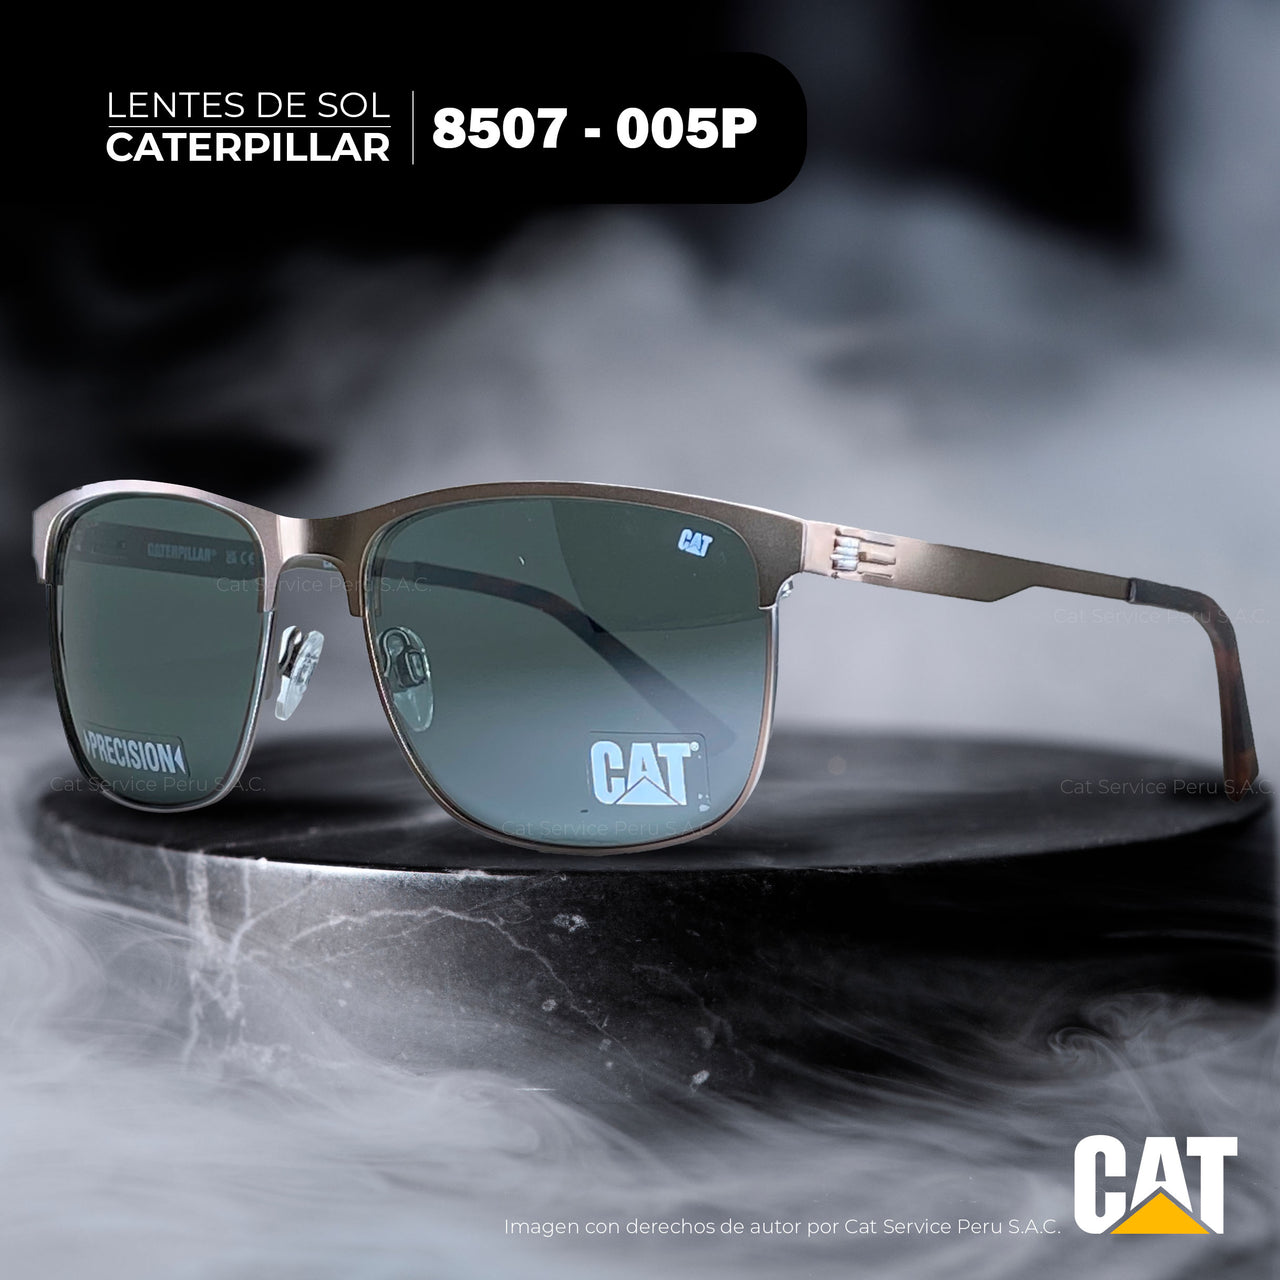 Cat CPS-8507-005P Polarized Black Moons Sunglasses 